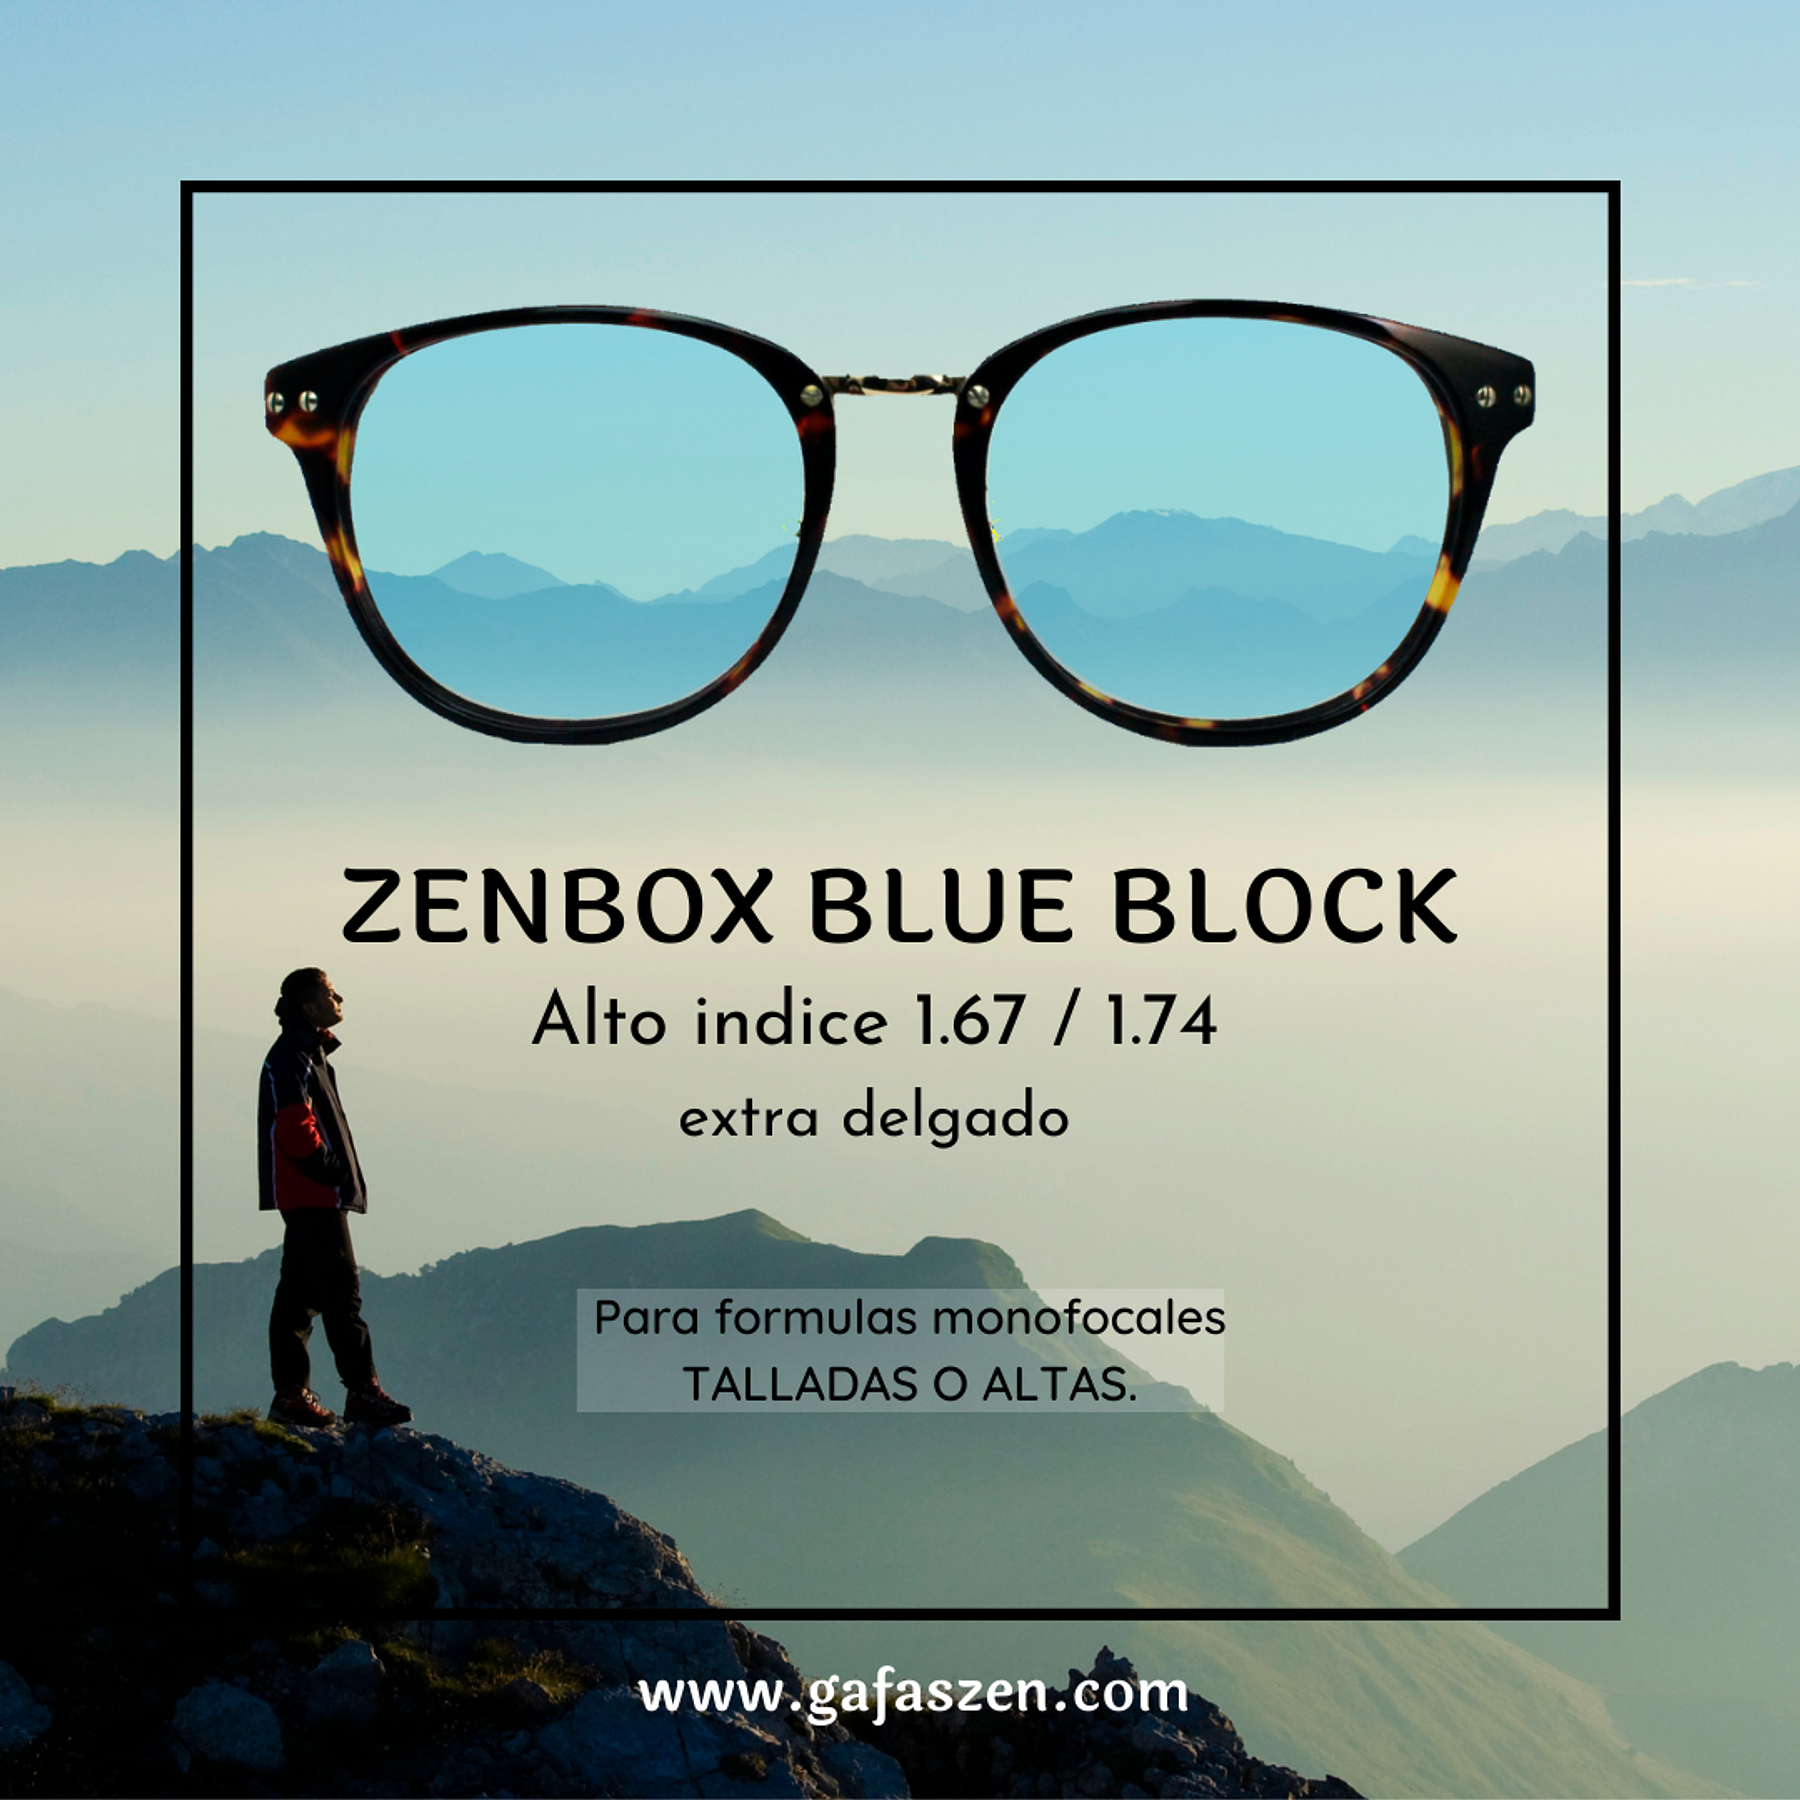 ZENBOX Alto Indice 1.67 / 1.74 Blue Block